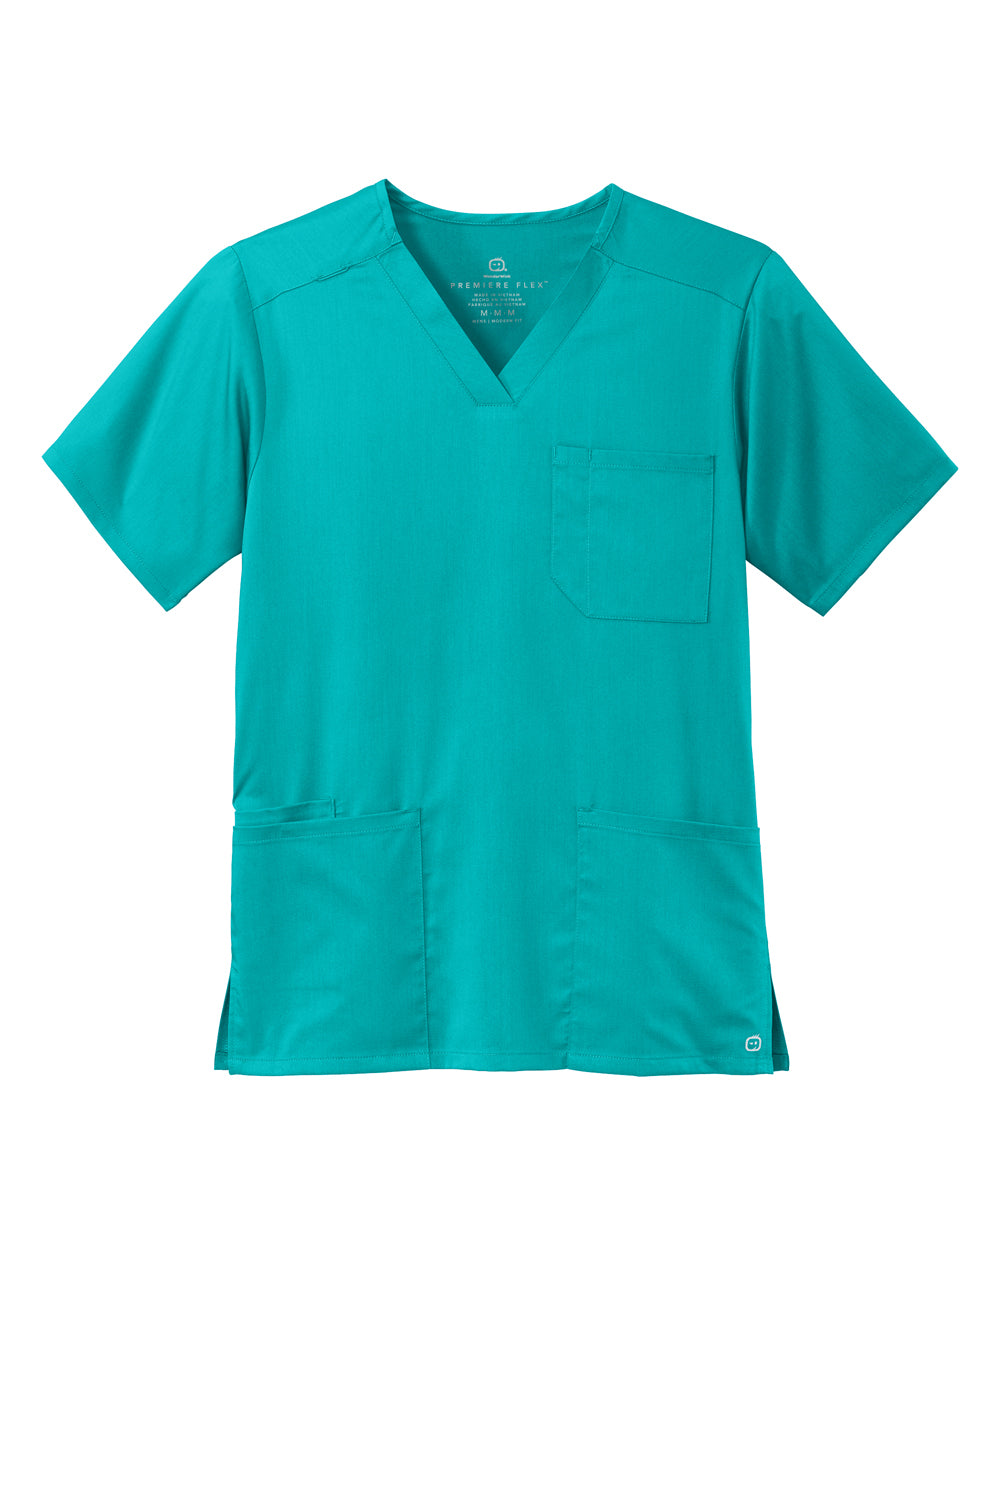 Wonderwink WW5068 Premiere Flex Short Sleeve V-Neck Shirt Teal Blue Flat Front